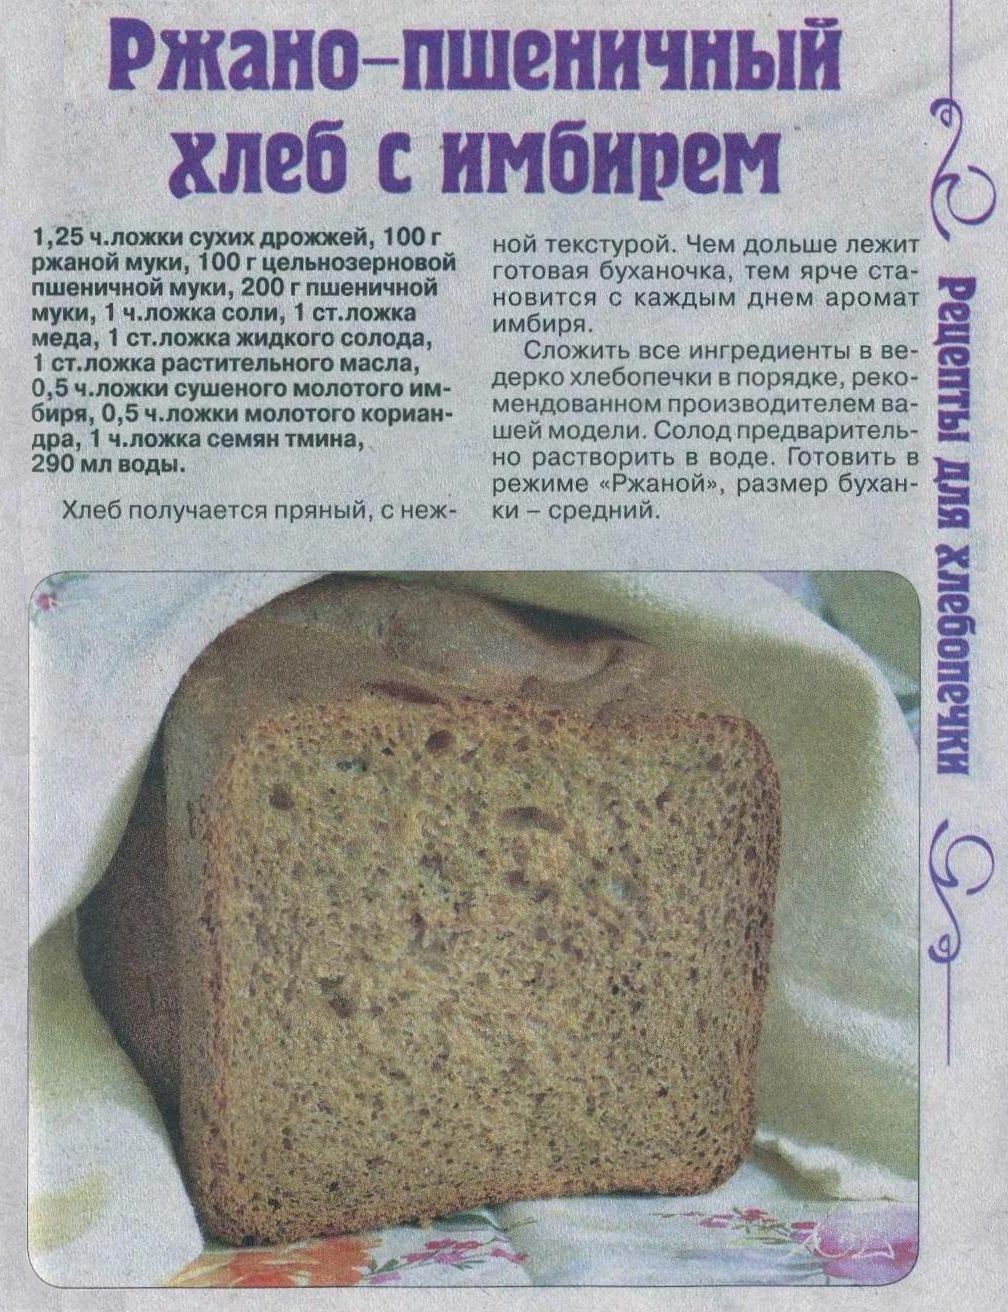 Старые рецепты хлеба без дрожжей. Рецепт хлеба в хлебопечке. Тесто на хлеб в хлебопечке. Домашний хлеб в хлебопечке. Рецептура ржаного хлеба.